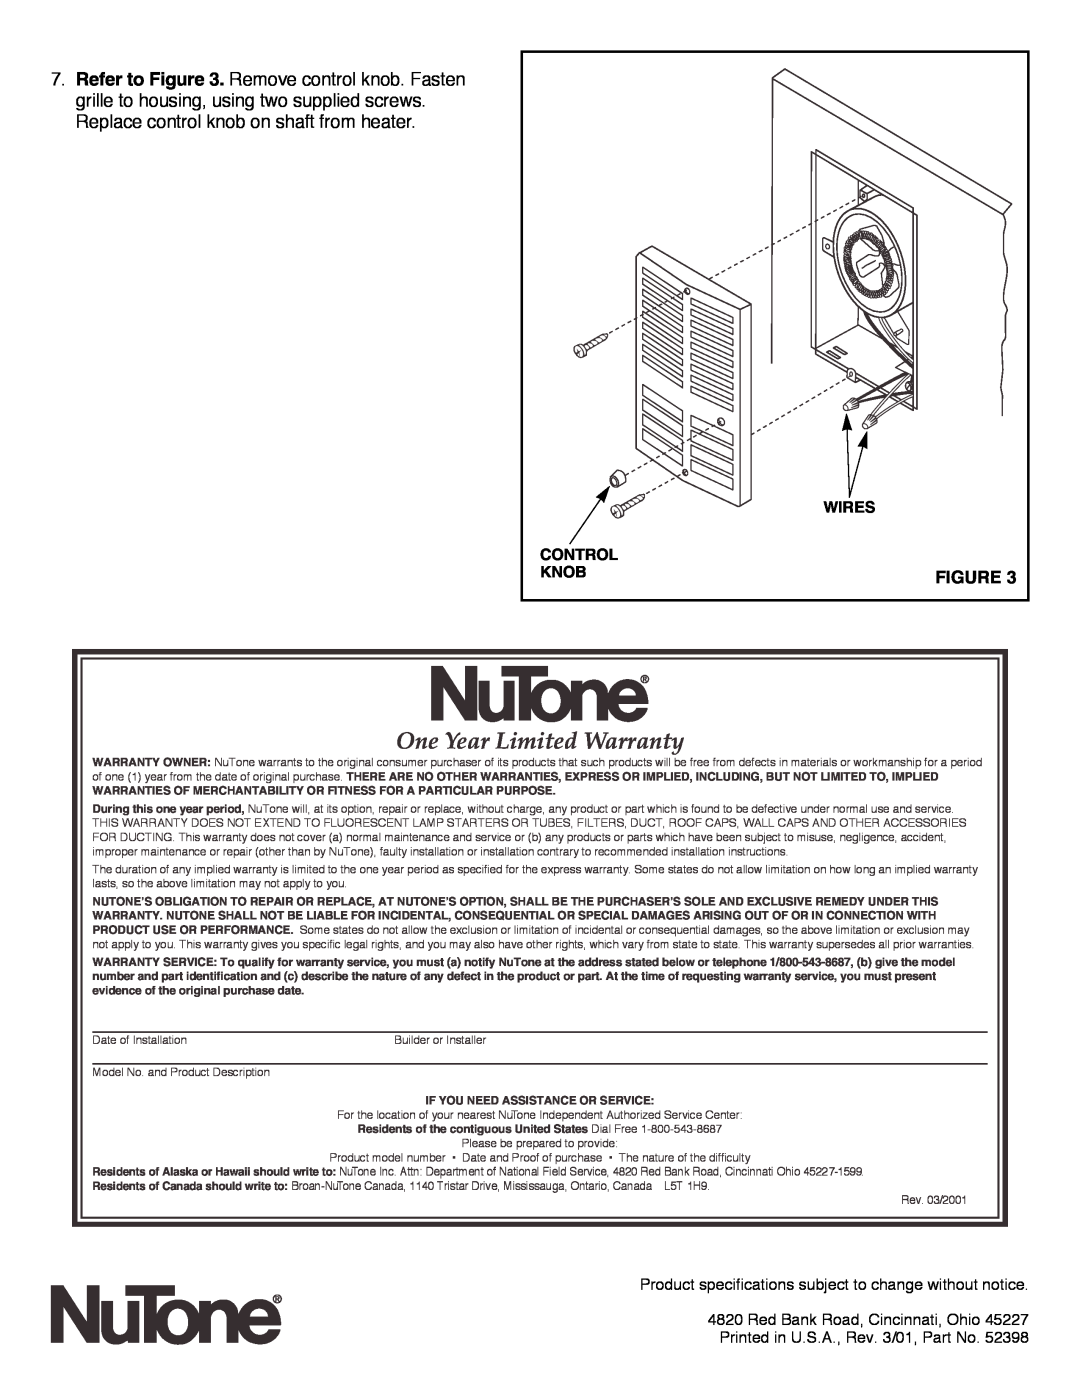 NuTone 9376N installation instructions One Year Limited Warranty, Wires, Control, Knob, Red Bank Road, Cincinnati, Ohio 